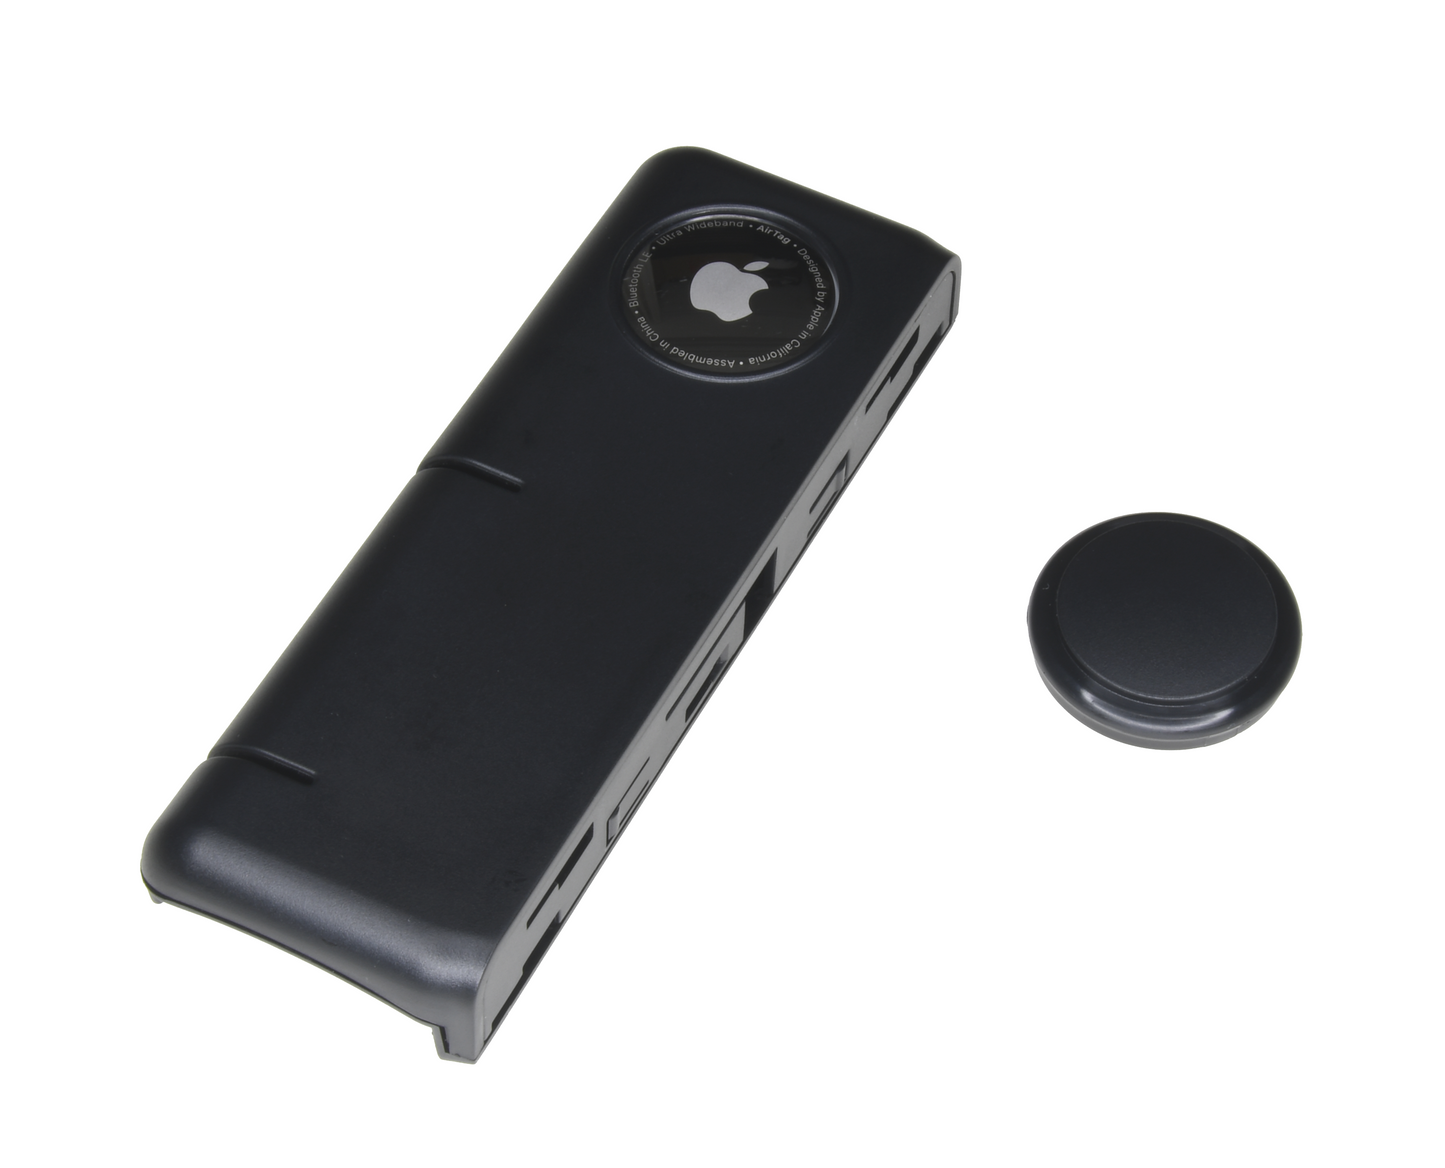 Sideclick Universal Remote Attachment for Apple TV 2nd Gen 4K - Silver Siri Remote